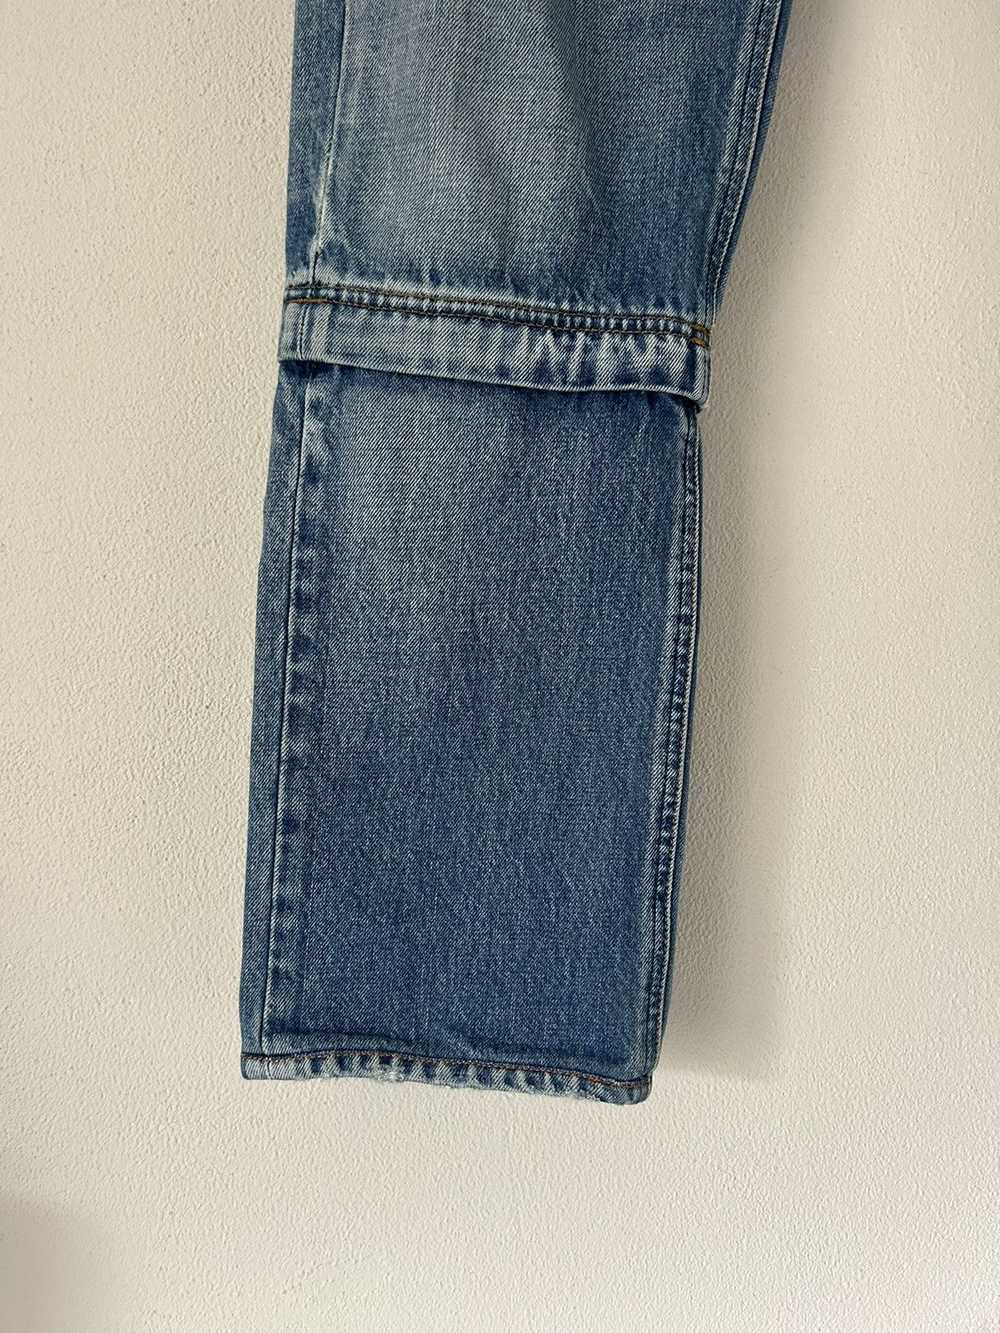 Balenciaga SS18 Convertible Denim Jeans - image 6